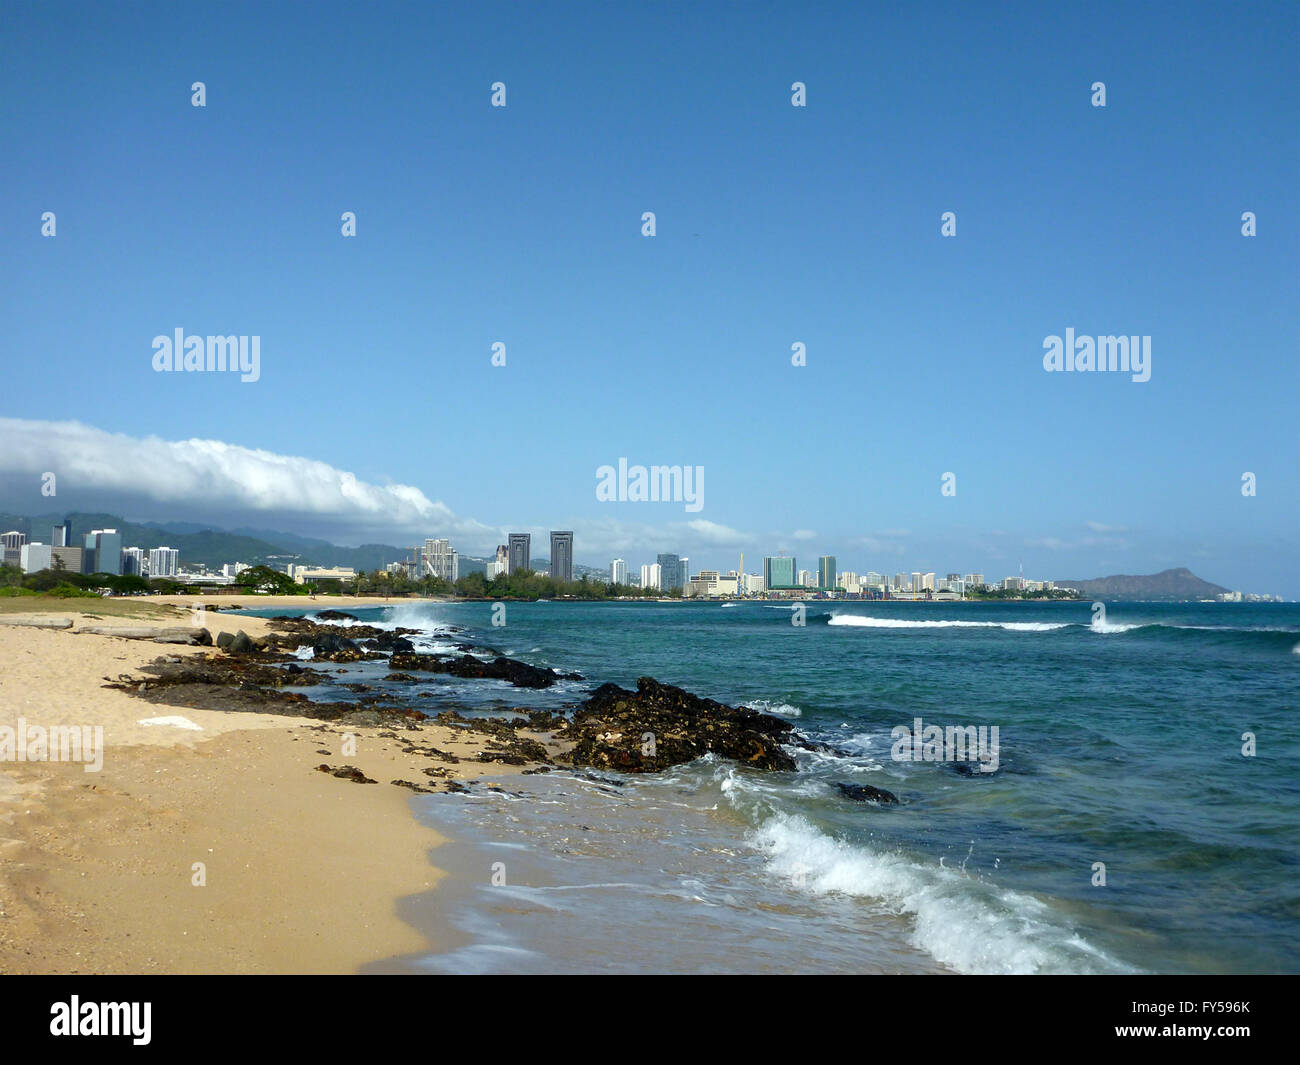 Sand Island beach off the coast of Oahu, Hawaii.  Featuring crashing waves and Downtown Honolulu, Waikiki in the background. Stock Photo